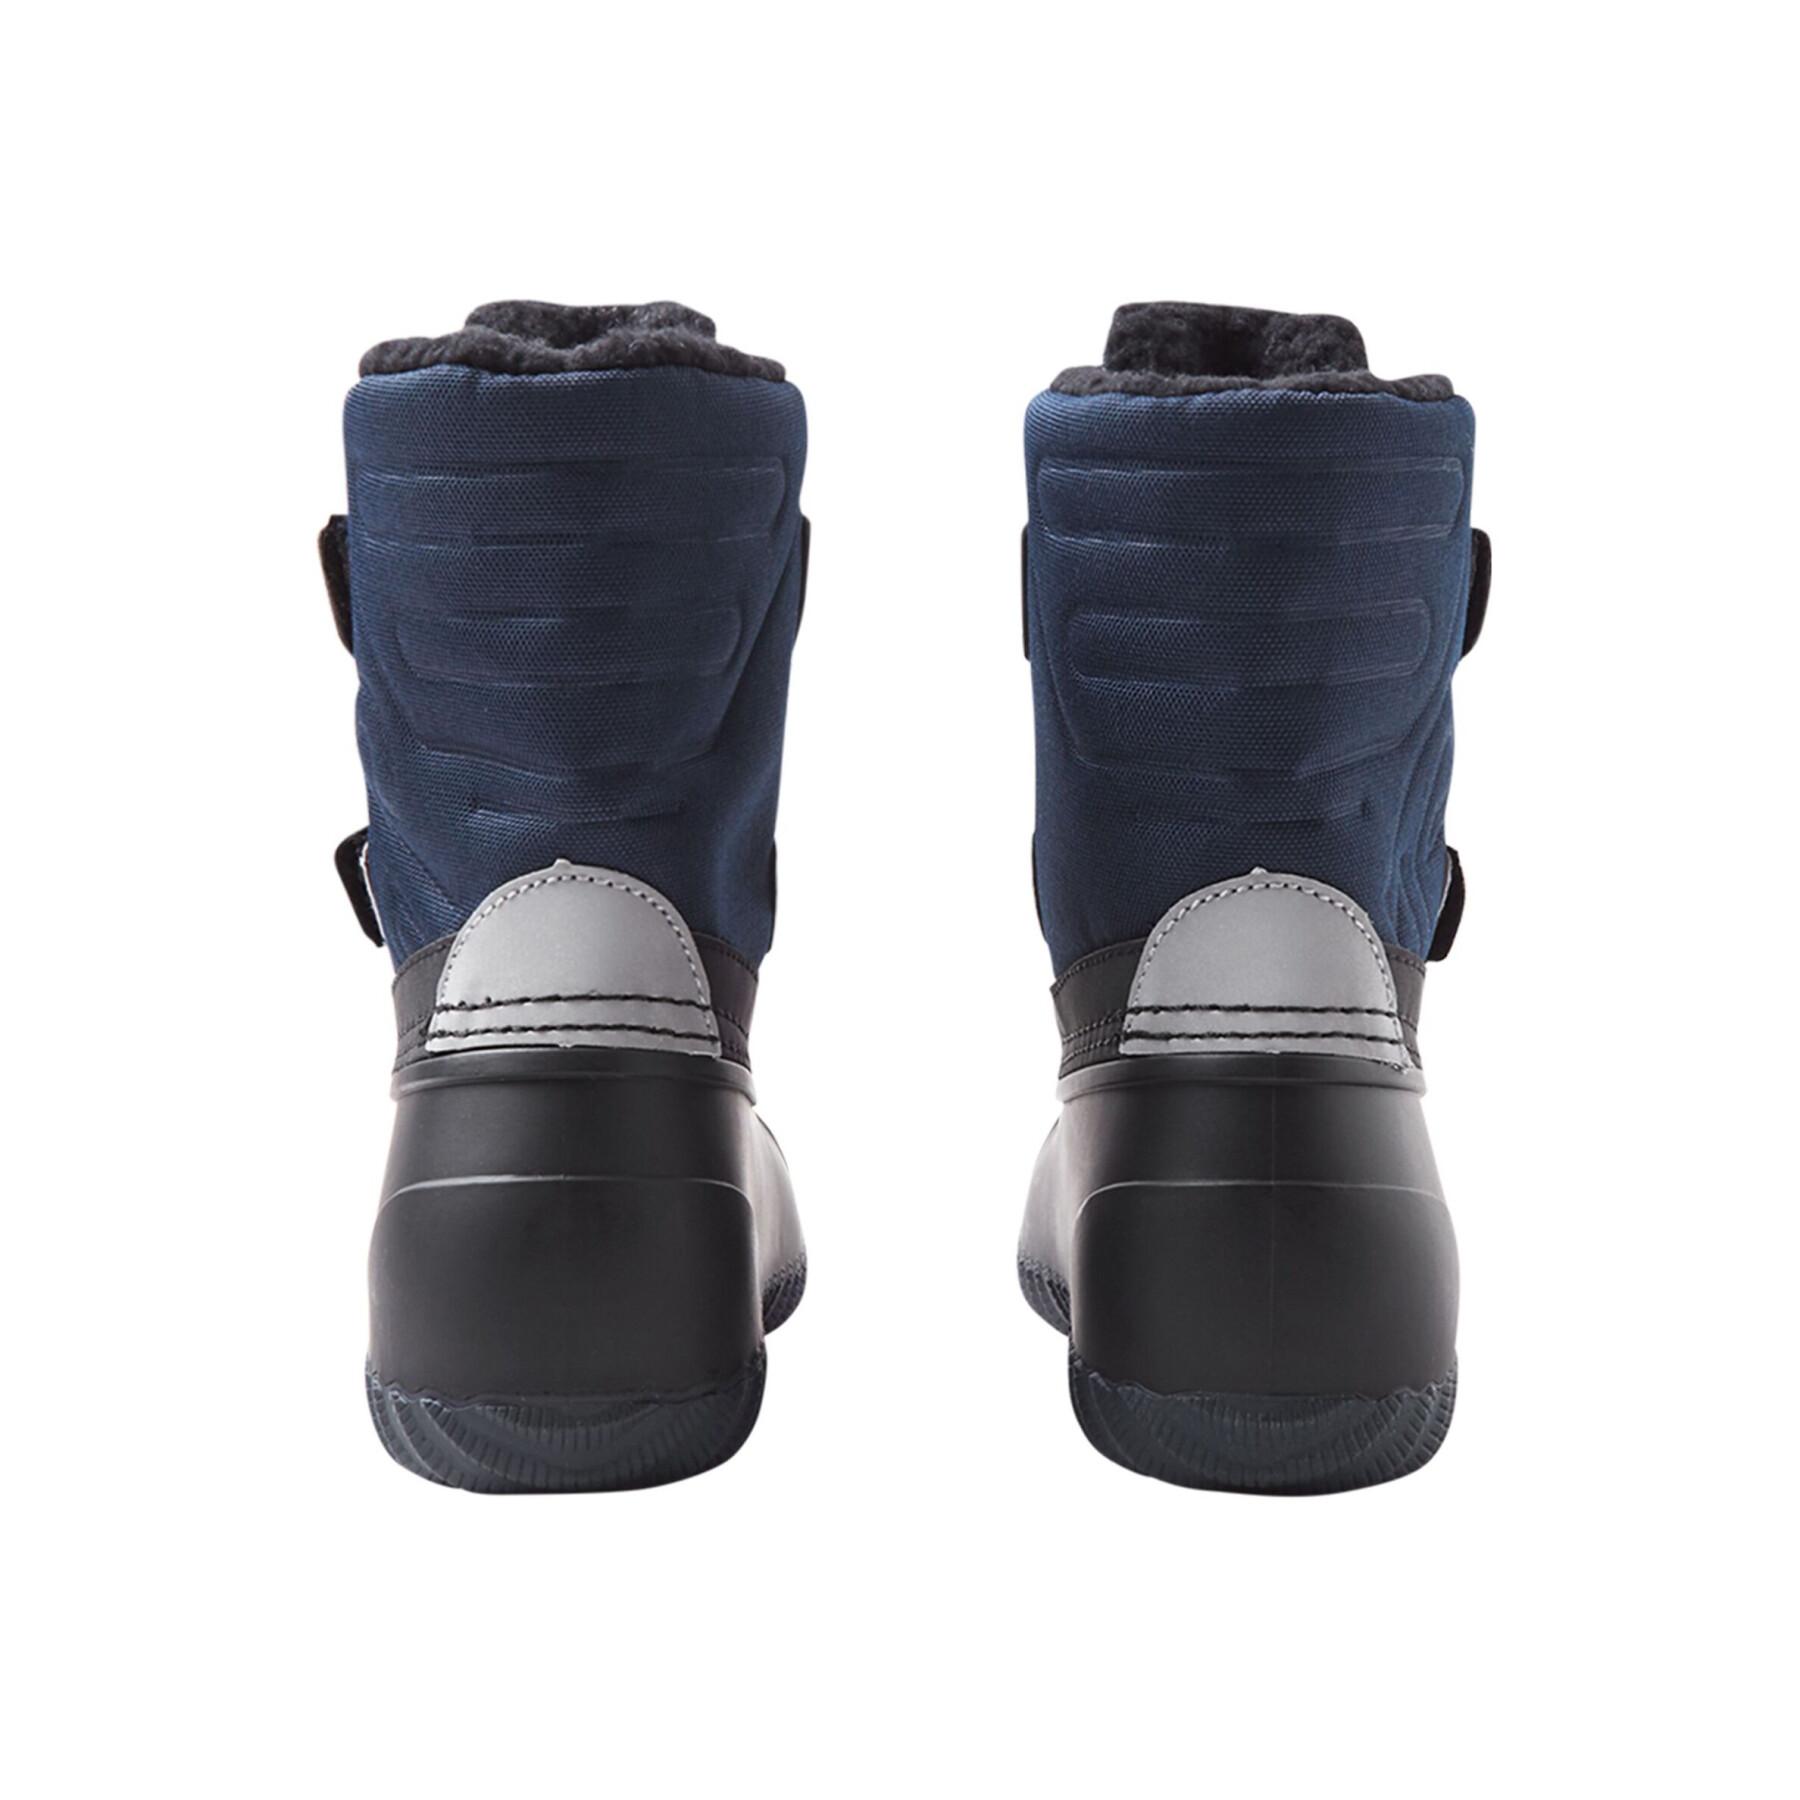 Baby winter boots Reima Lumisin